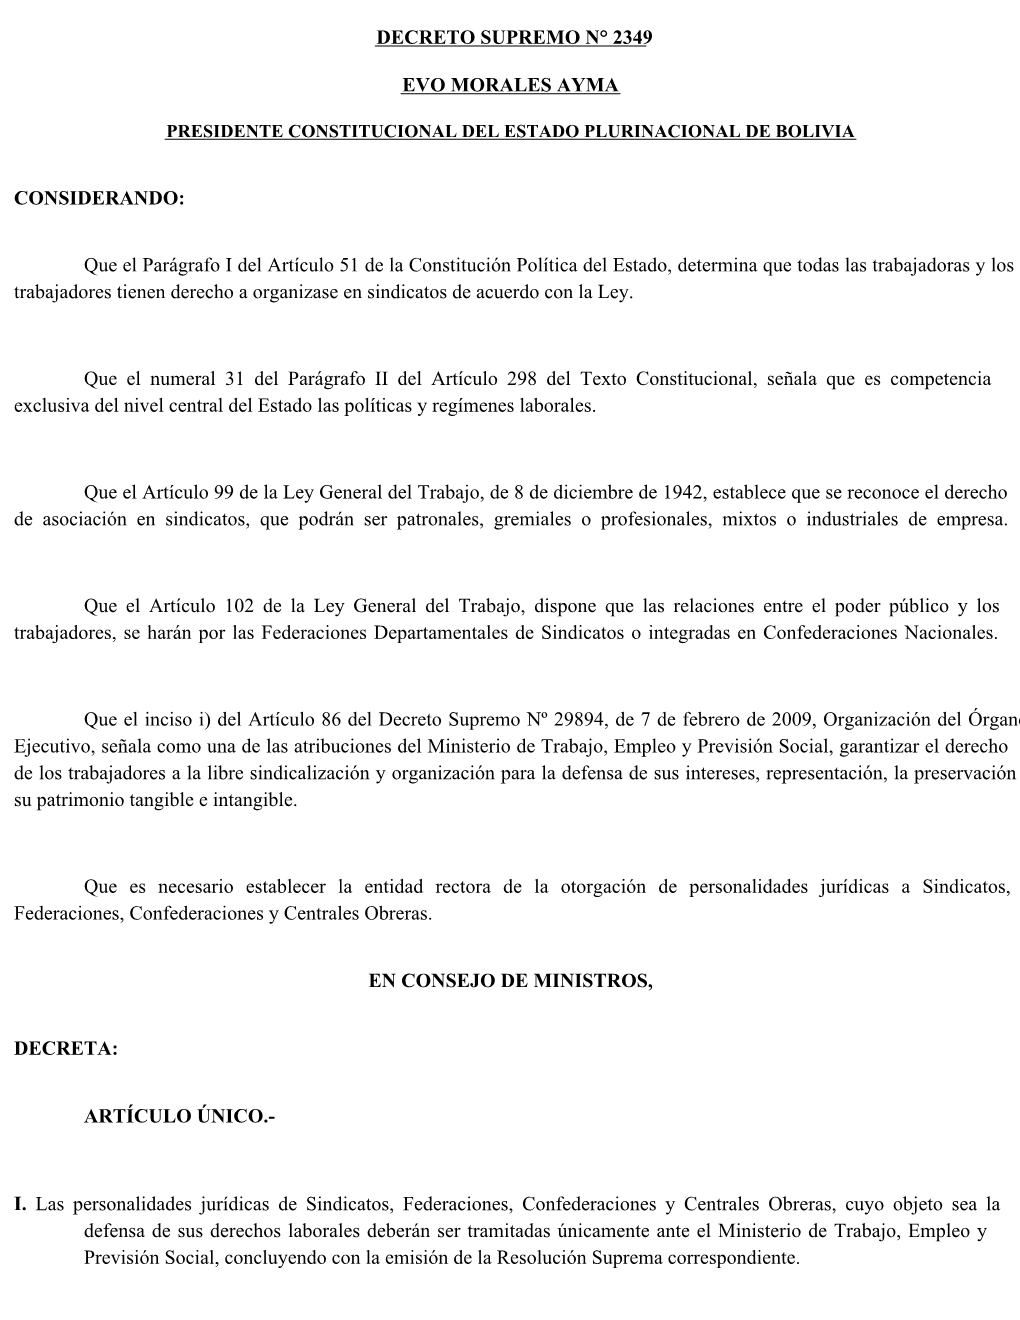 Decreto Supremo N° 2349 Evo Morales Ayma